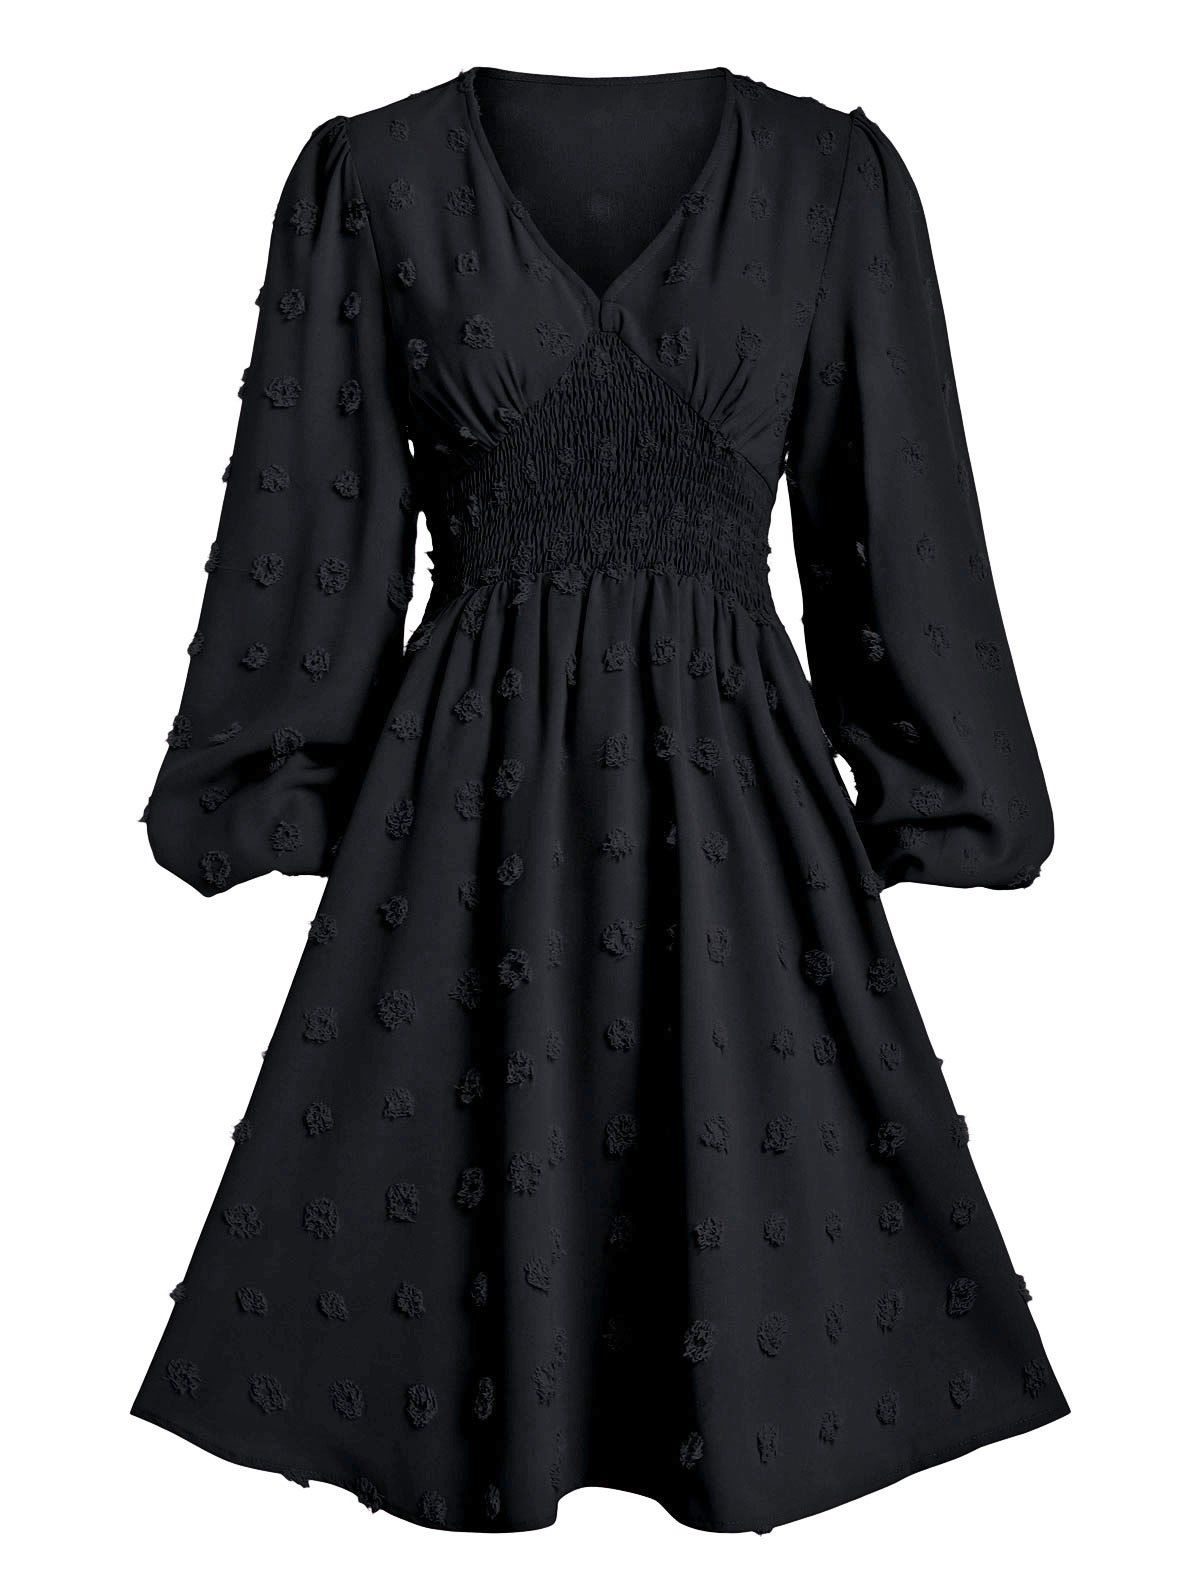 Swiss Dot Smocked Waist Long Sleeve Dress - BLACK S